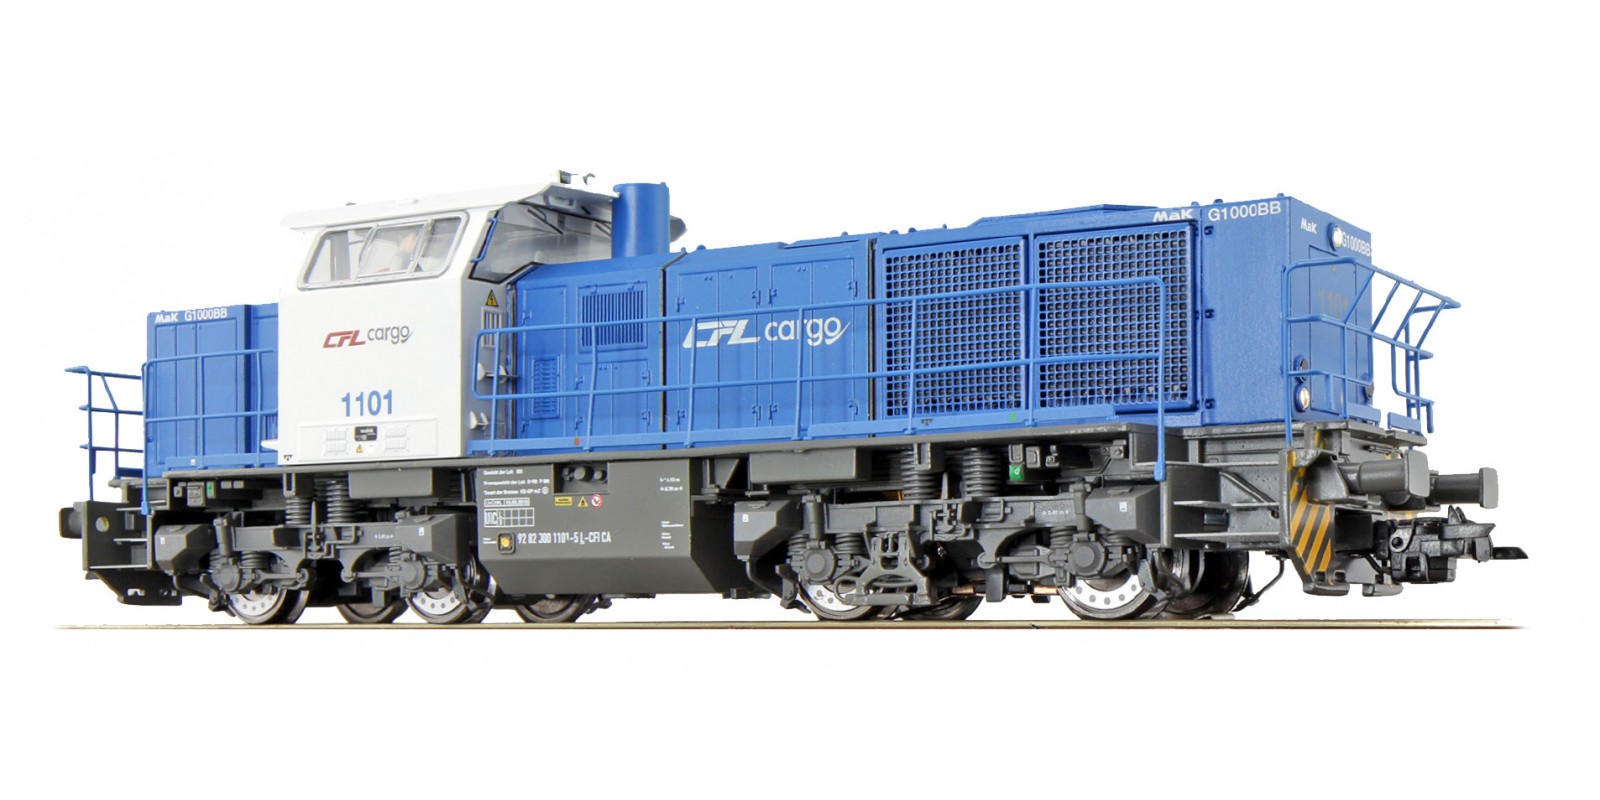 ES31308 Diesel locomotive, H0, G1000, 1101 CFL Cargo, blue, Ep VI, prototypical condition around 2012, sound, shunting coupler, DC/AC